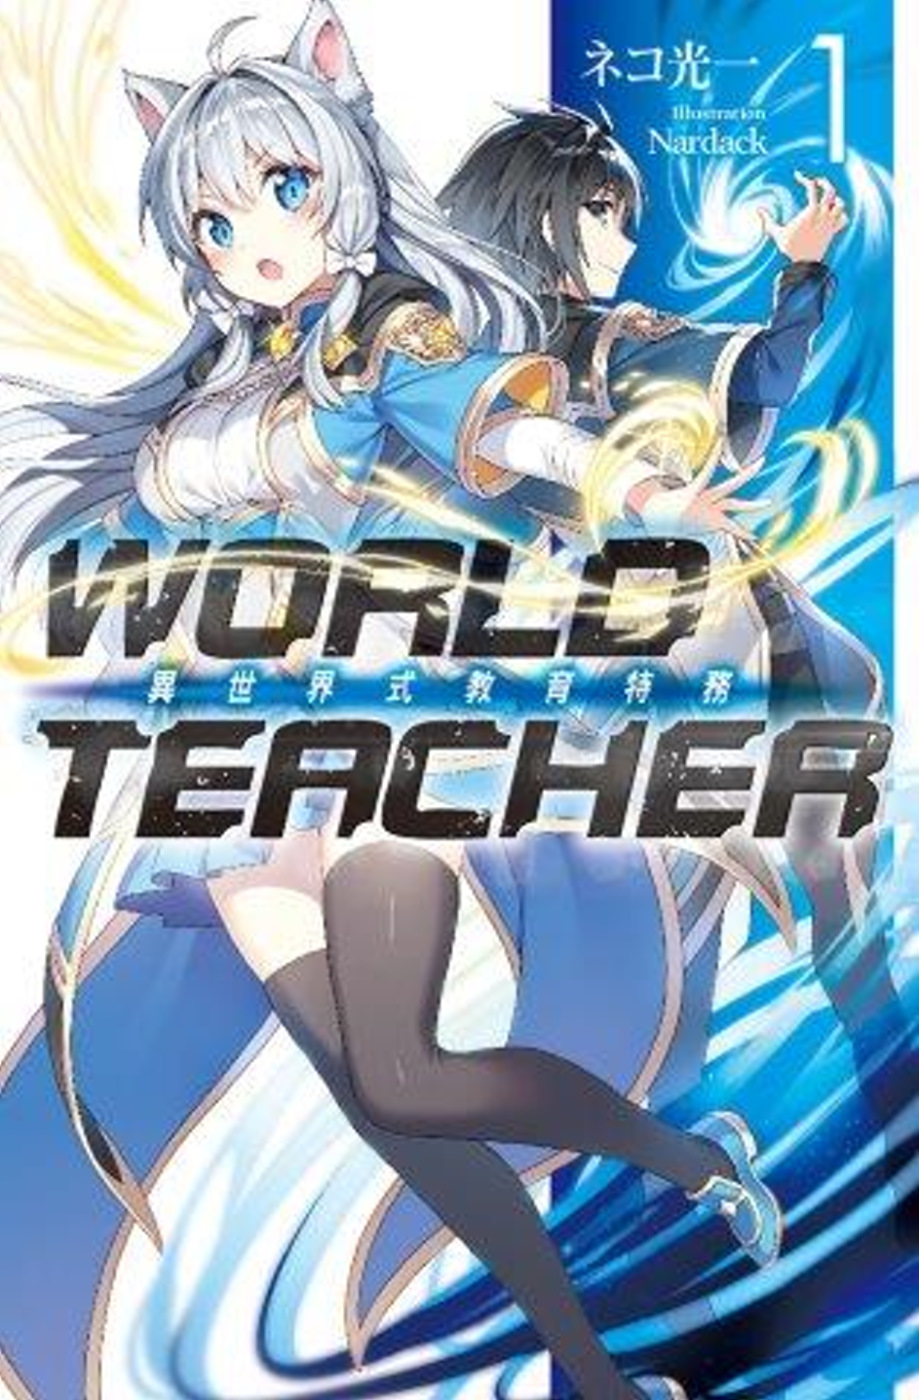 WORLD TEACHER 異世界式教育特務(01)